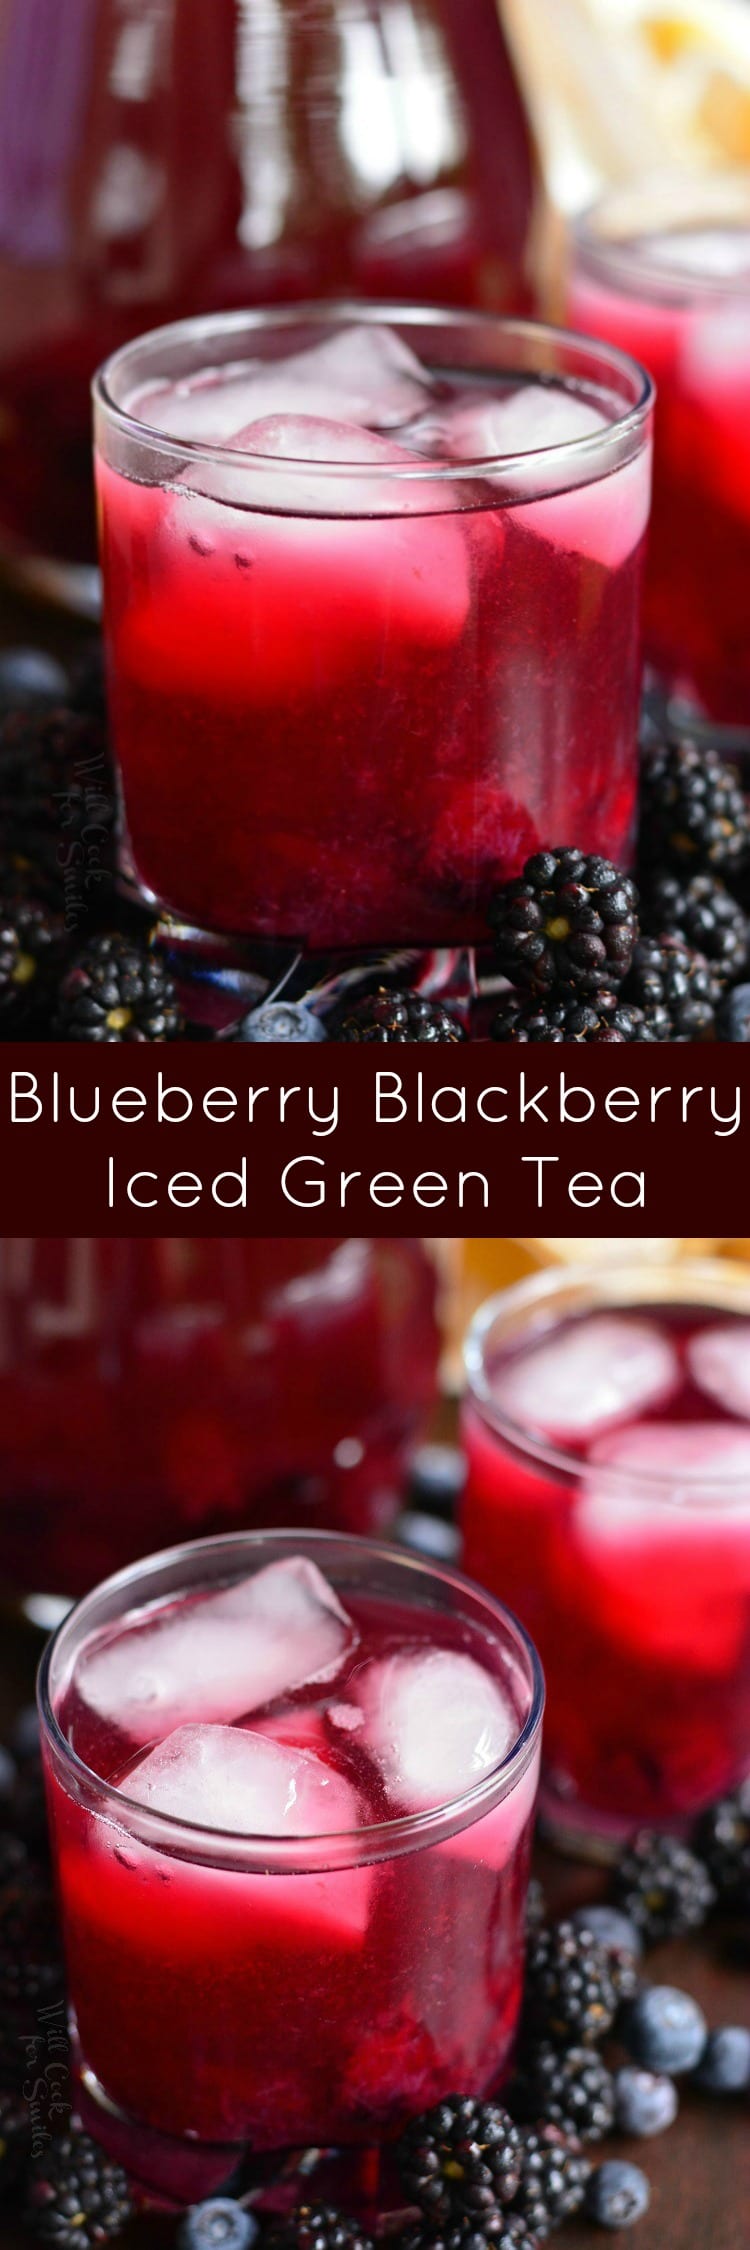 Blueberry Blackberry Iced Green Tea collage 